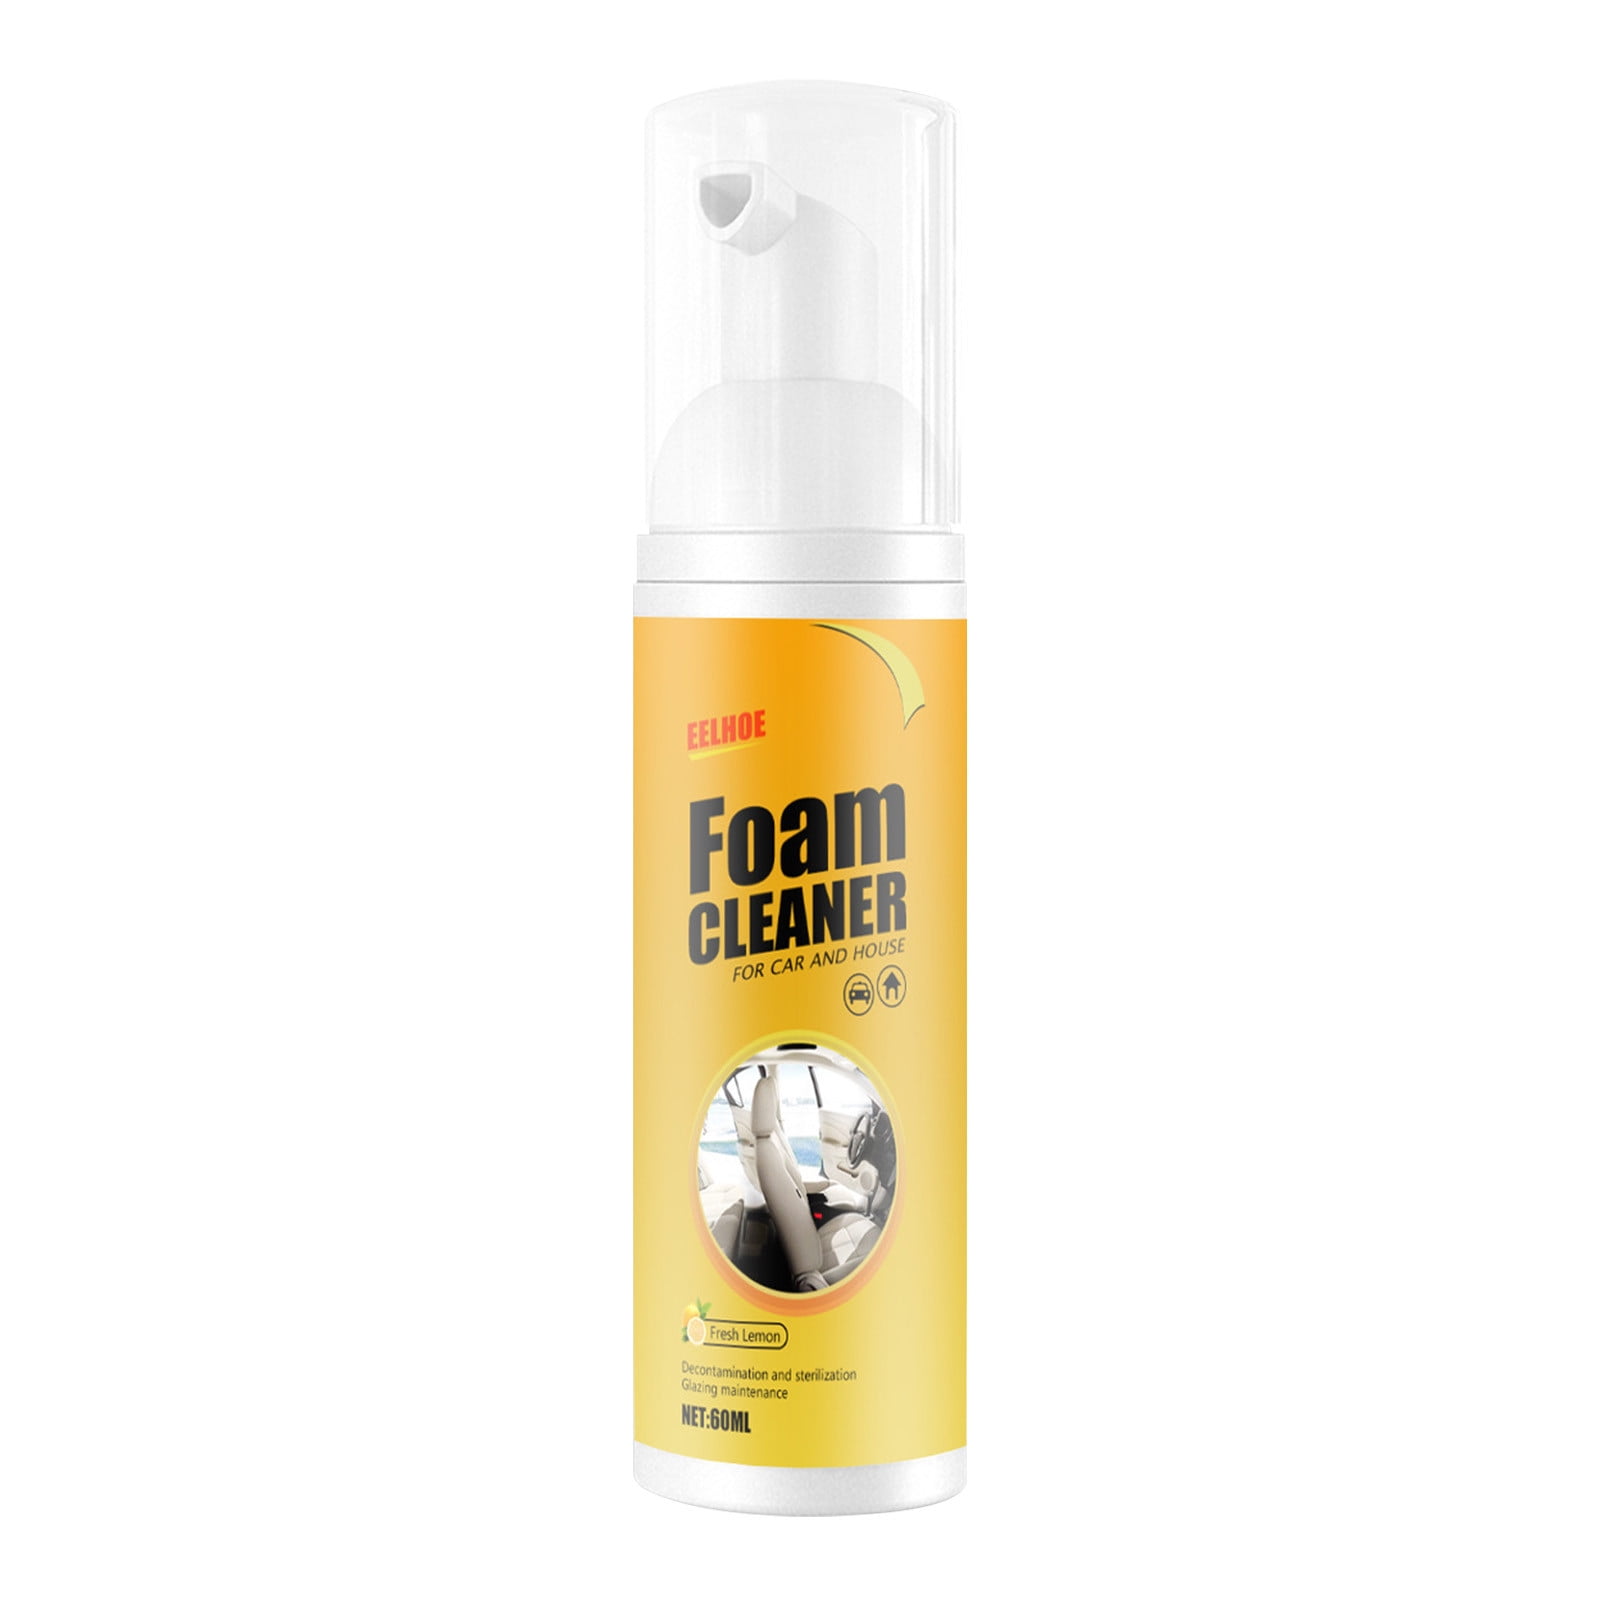 Multifunctional Car Foam Cleaner Spray - 00ml Strong Foam Cleaning